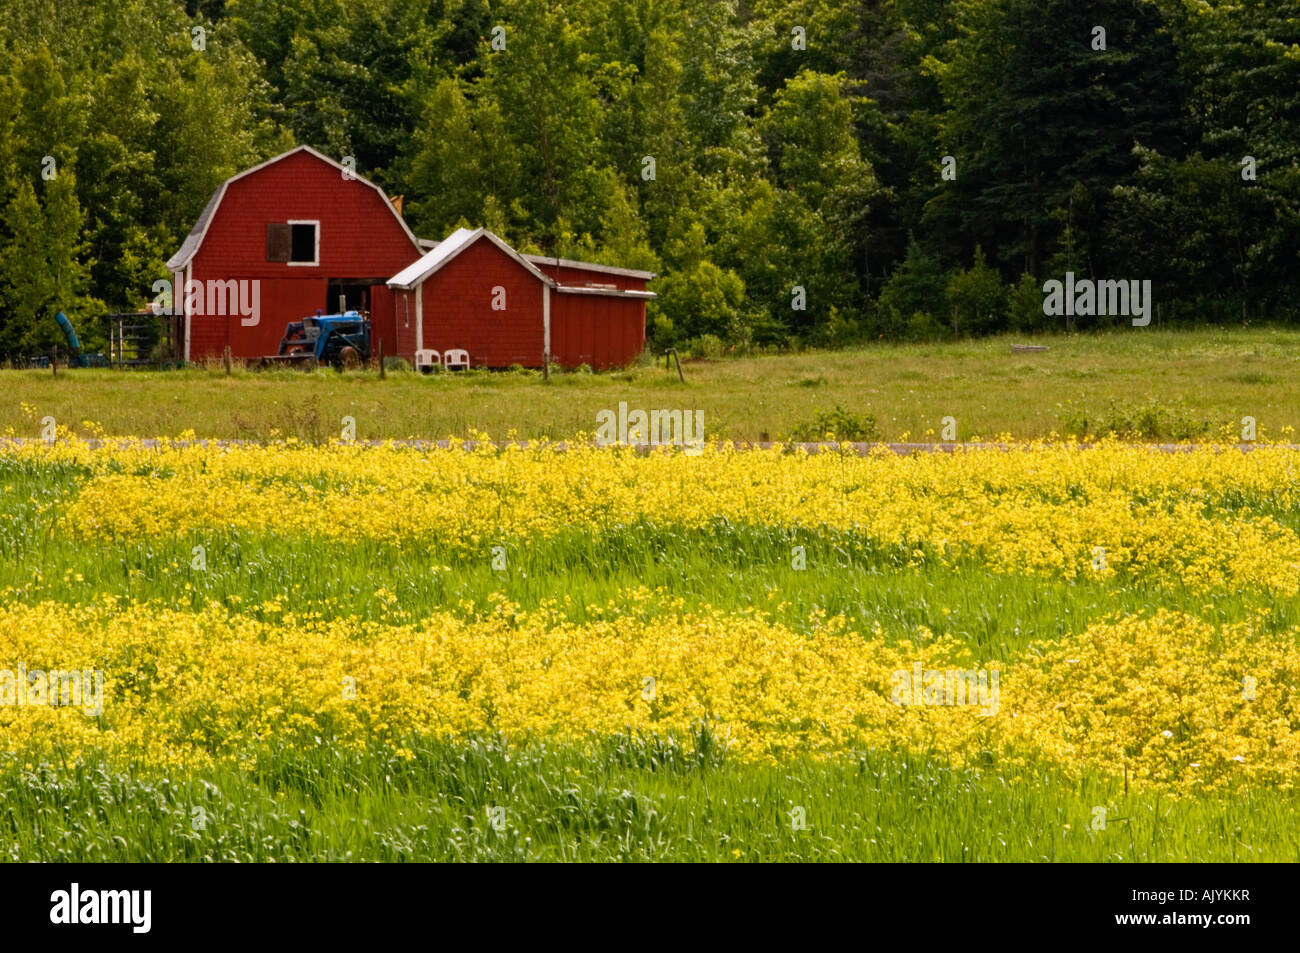 Potato fields and yellow mustard weed, , PE/PEI Prince Edward Island, Canada Stock Photo